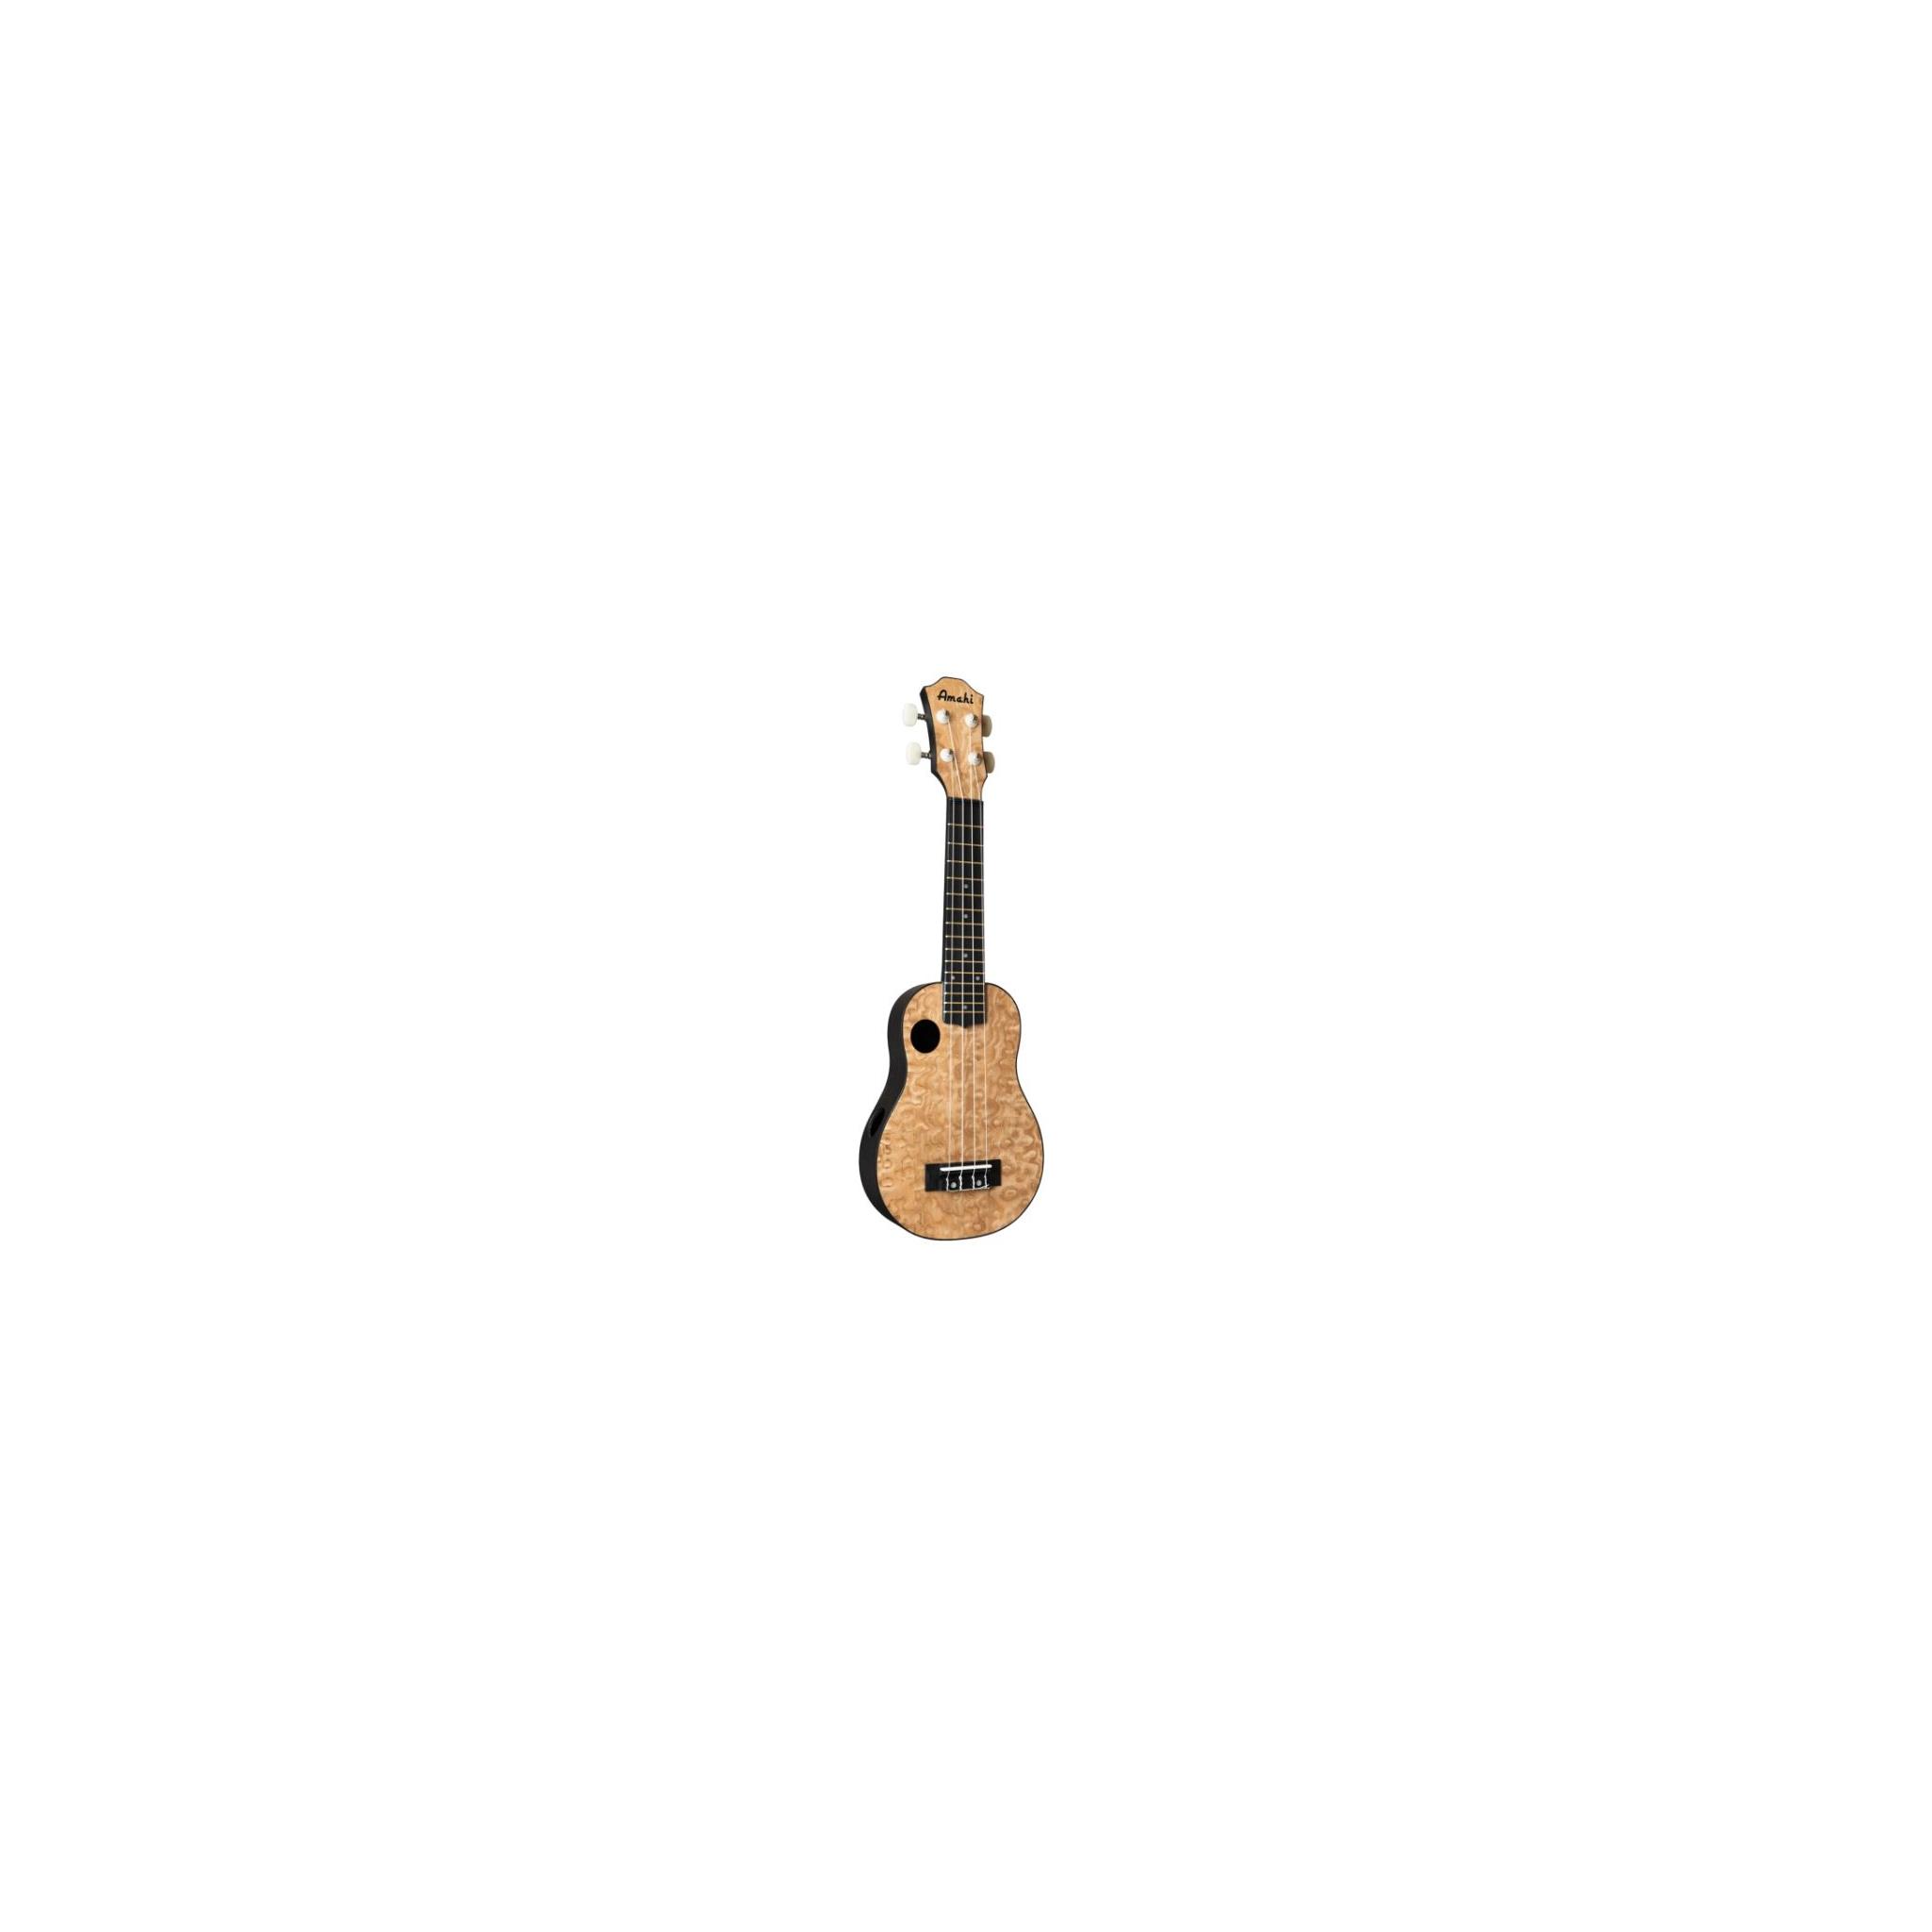 Amahi Soprano Troubador, Quilted Ash Top, Offset Soundhole HCLF880, w/ Bag